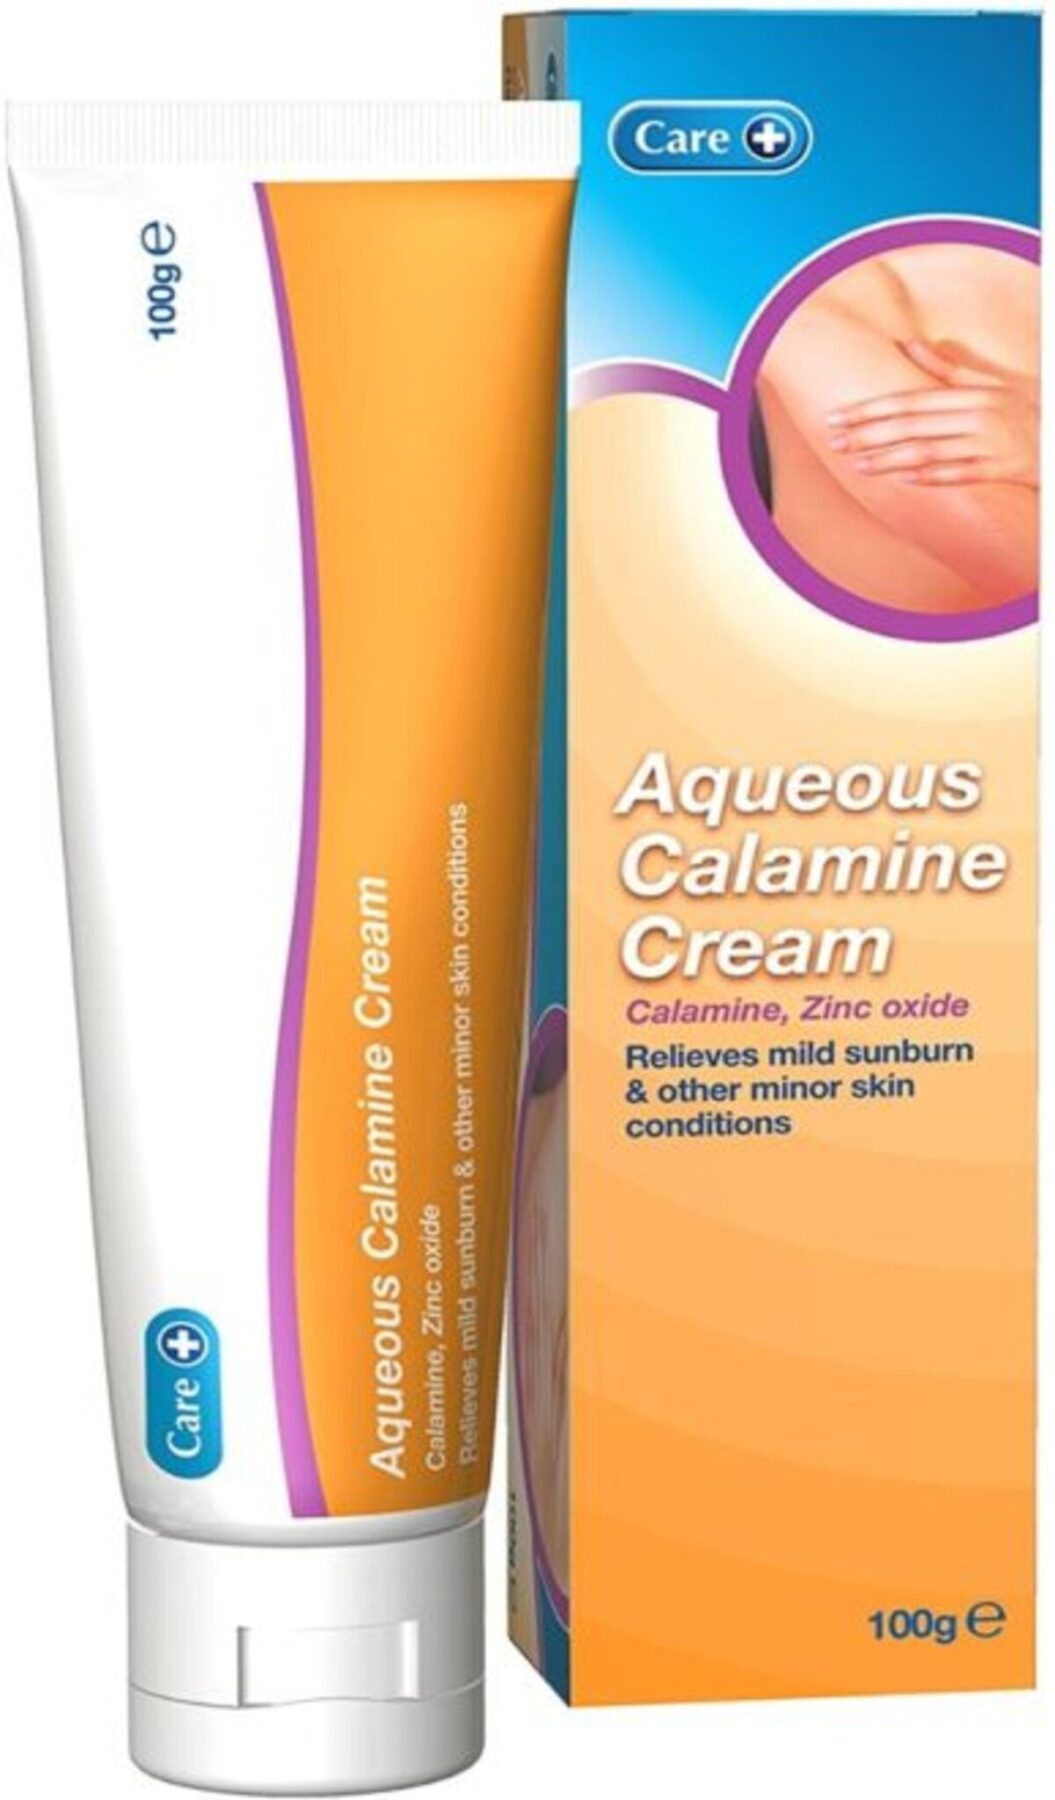 Care Aqueous Calamine Cream, 100g